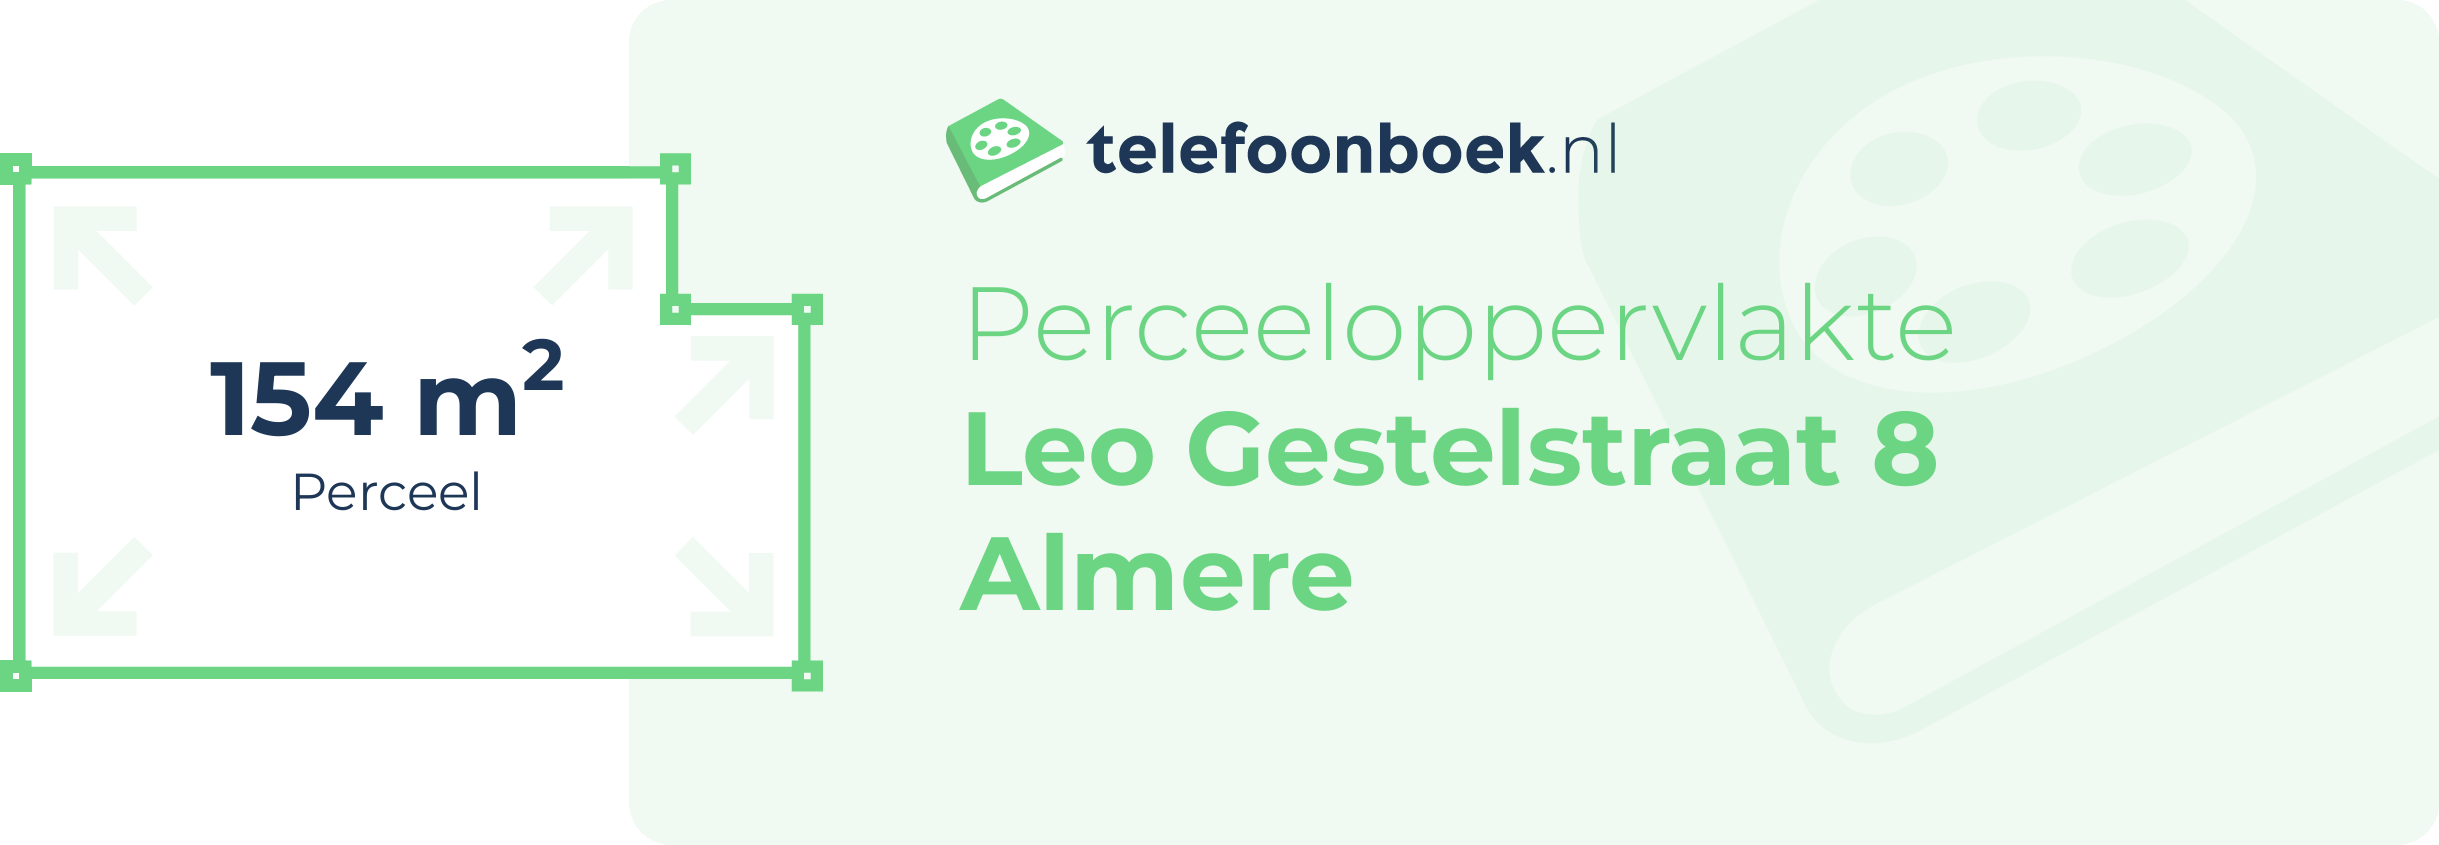 Perceeloppervlakte Leo Gestelstraat 8 Almere